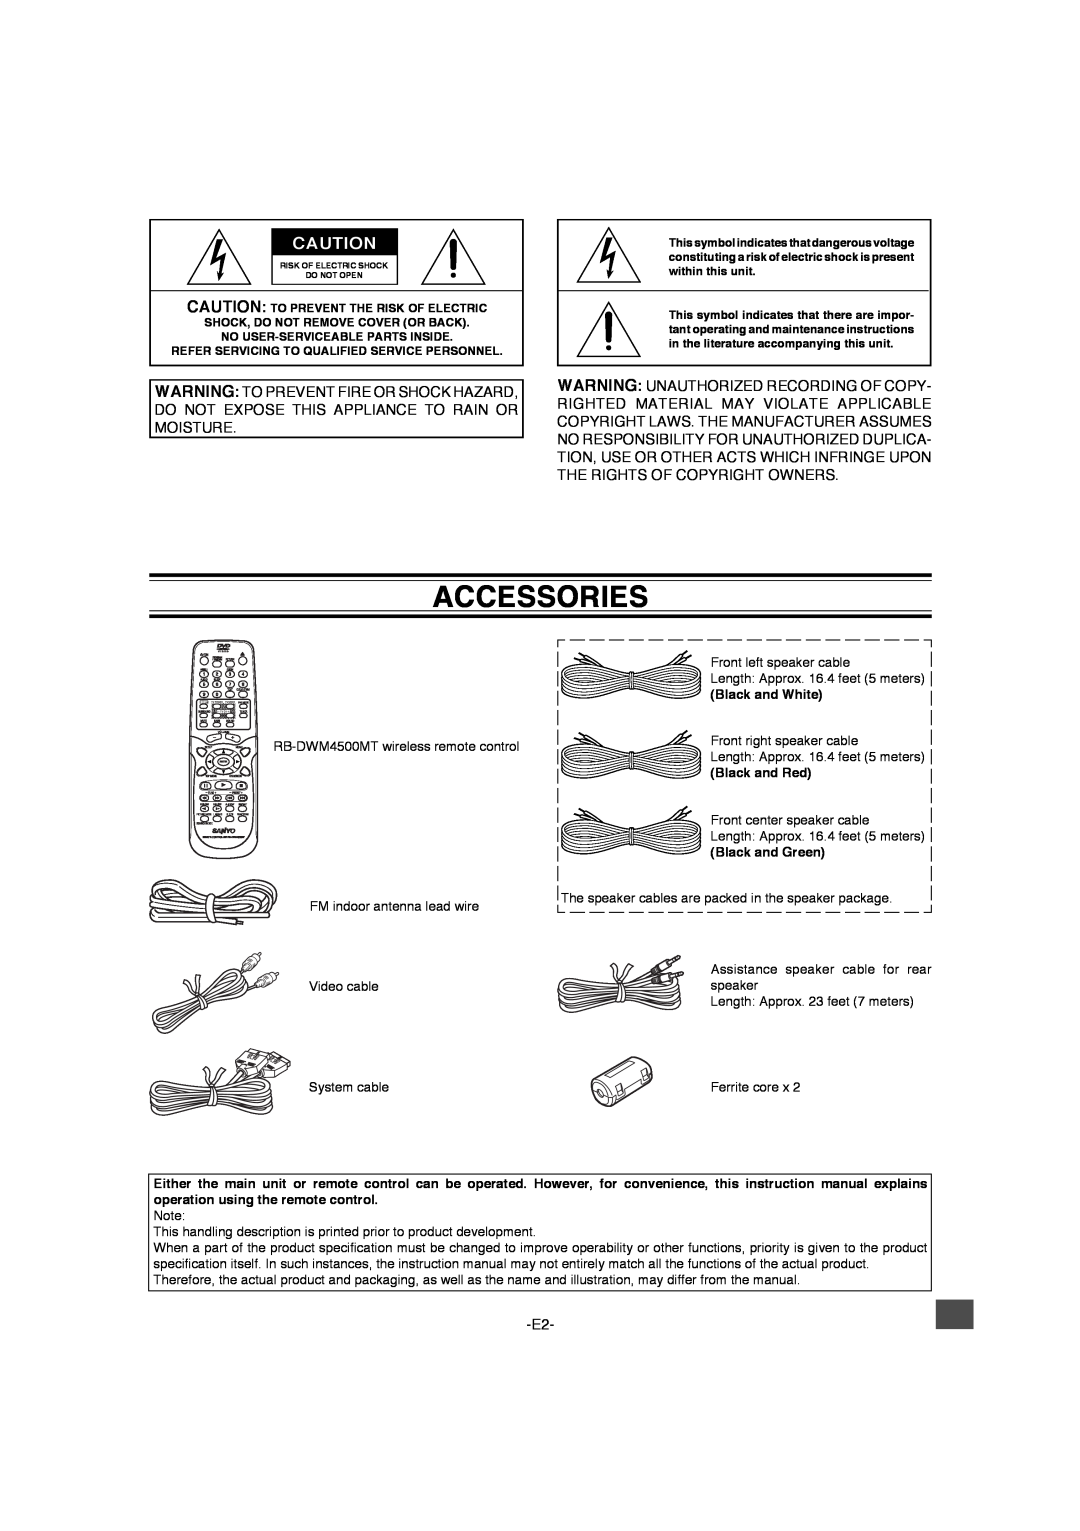 Sanyo DWM-4500 instruction manual Accessories 